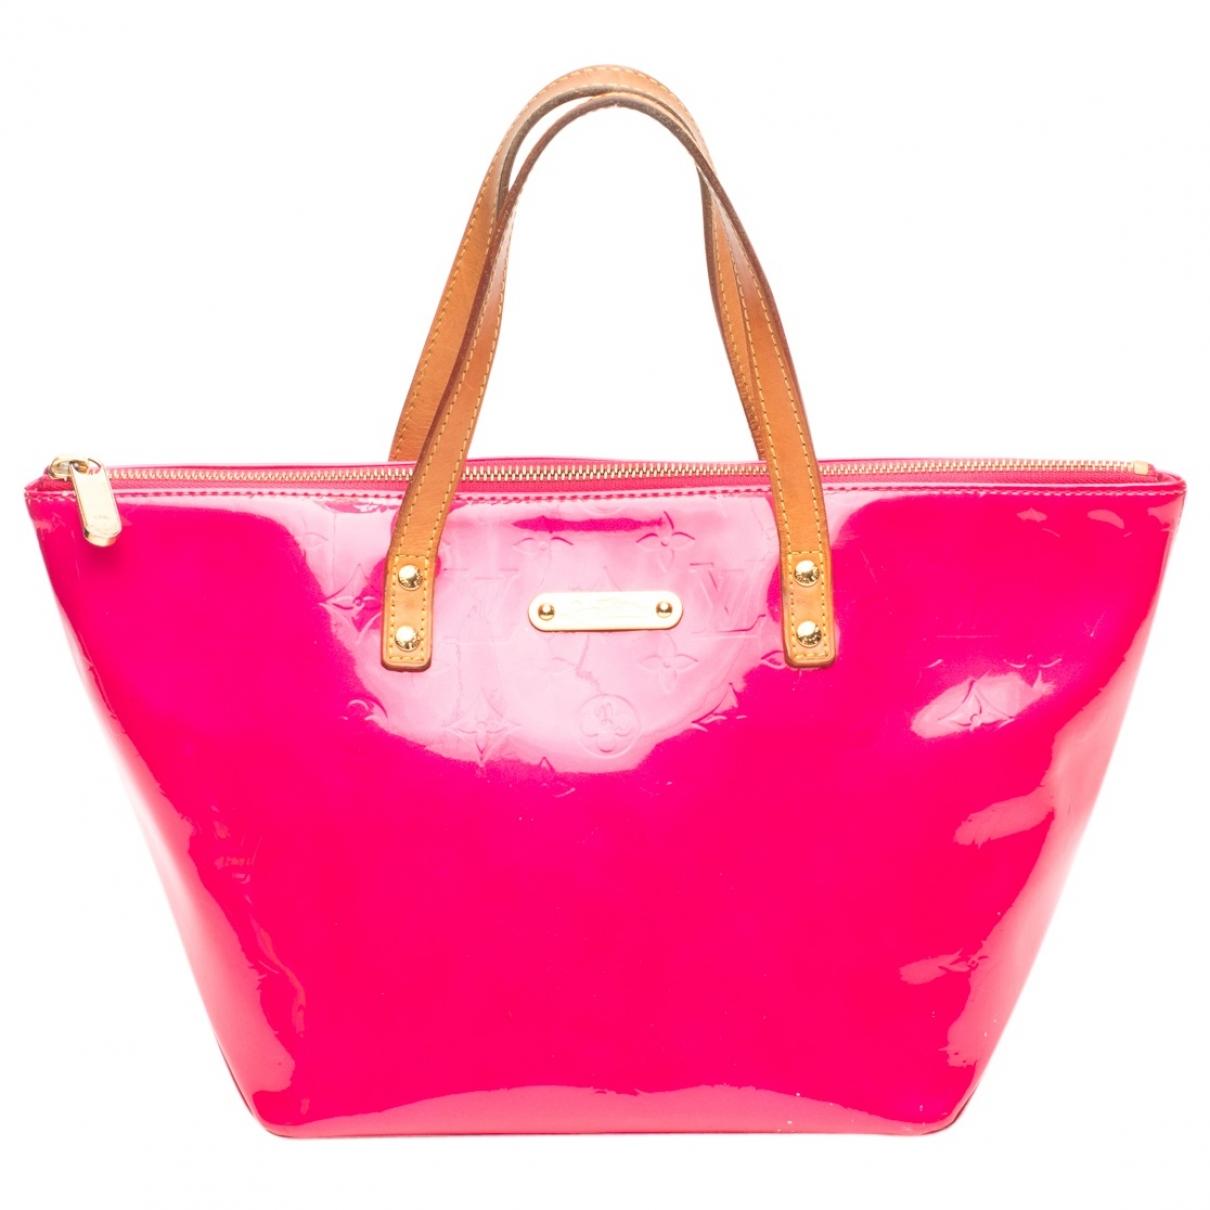 Lyst - Louis Vuitton Bellevue Pink Patent Leather Handbag in Pink